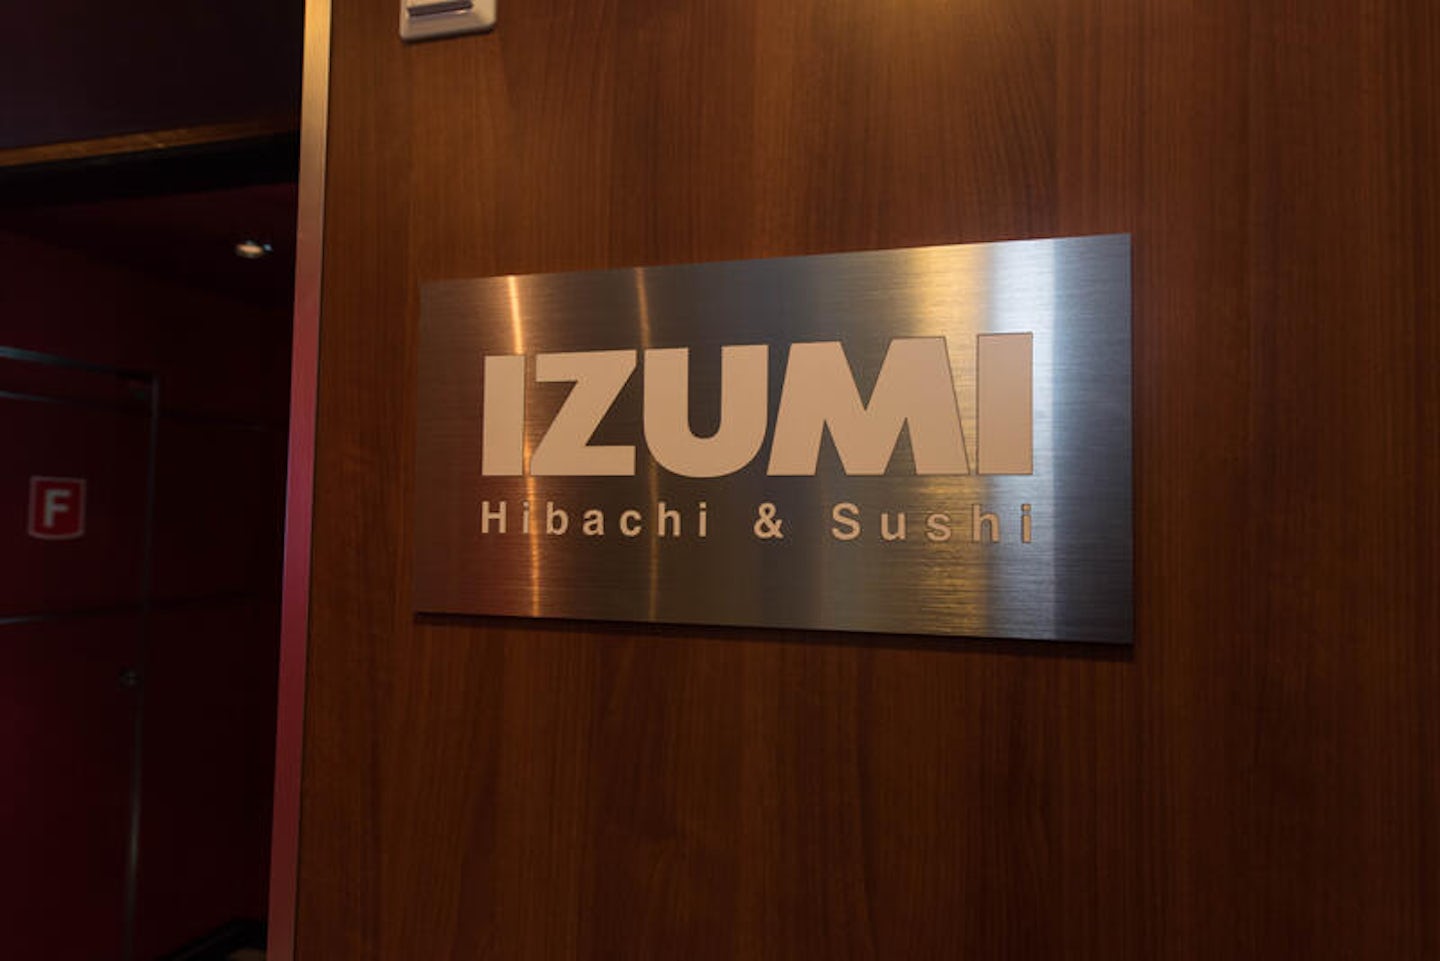 Izumi Hibachi & Sushi on Oasis of the Seas